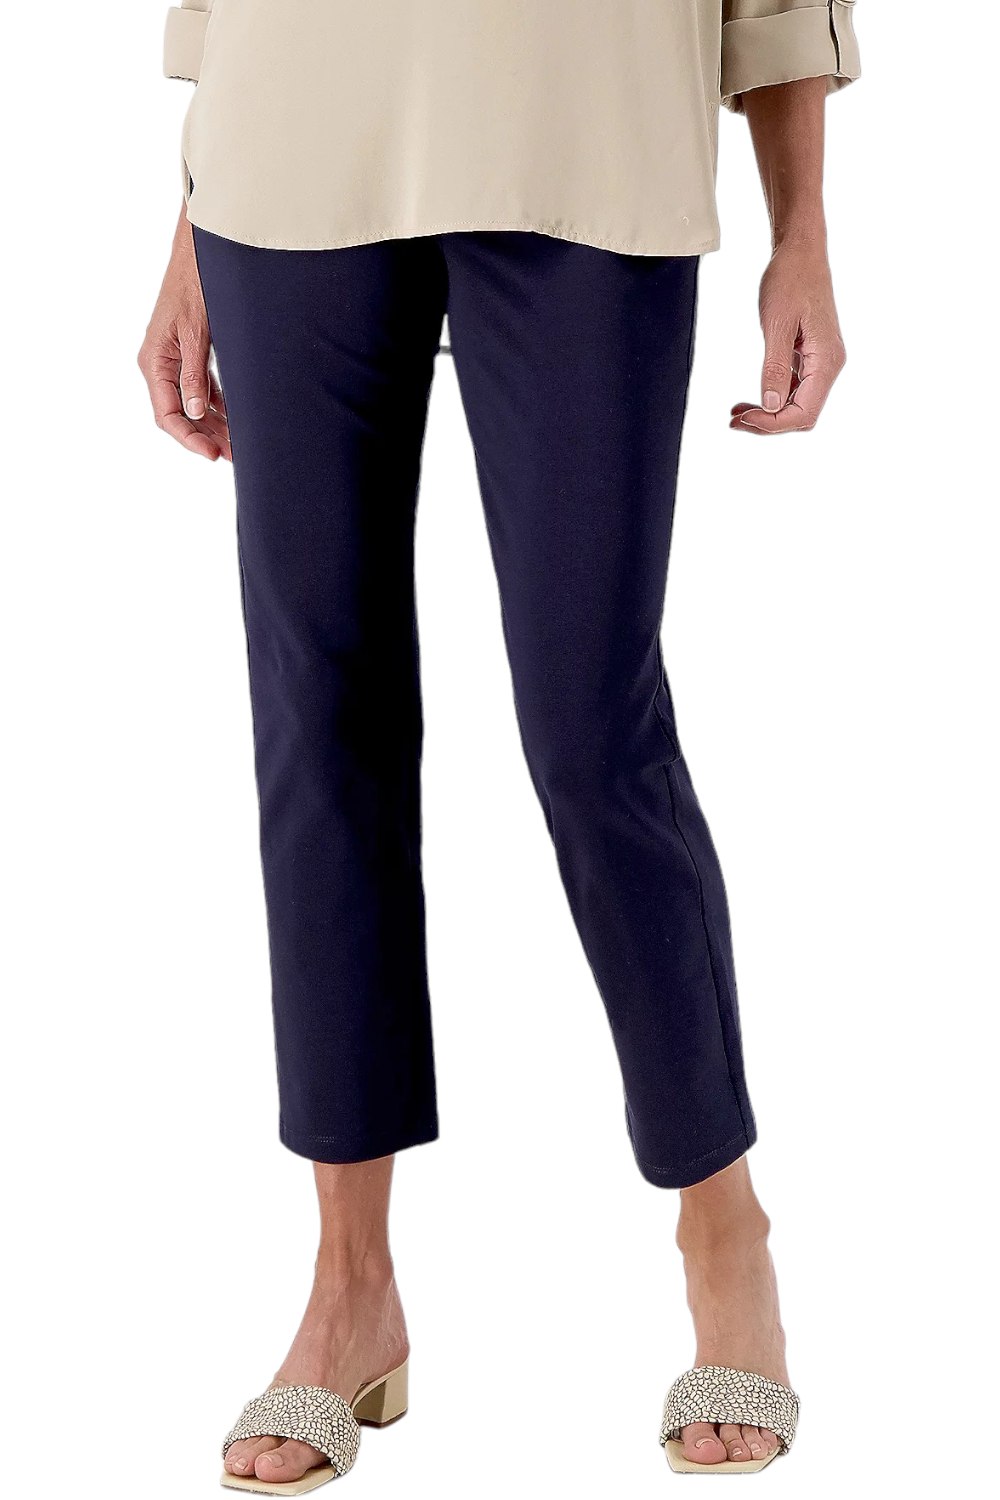 Susan Graver Weekend Petite Premium Stretch Pants Women's XL